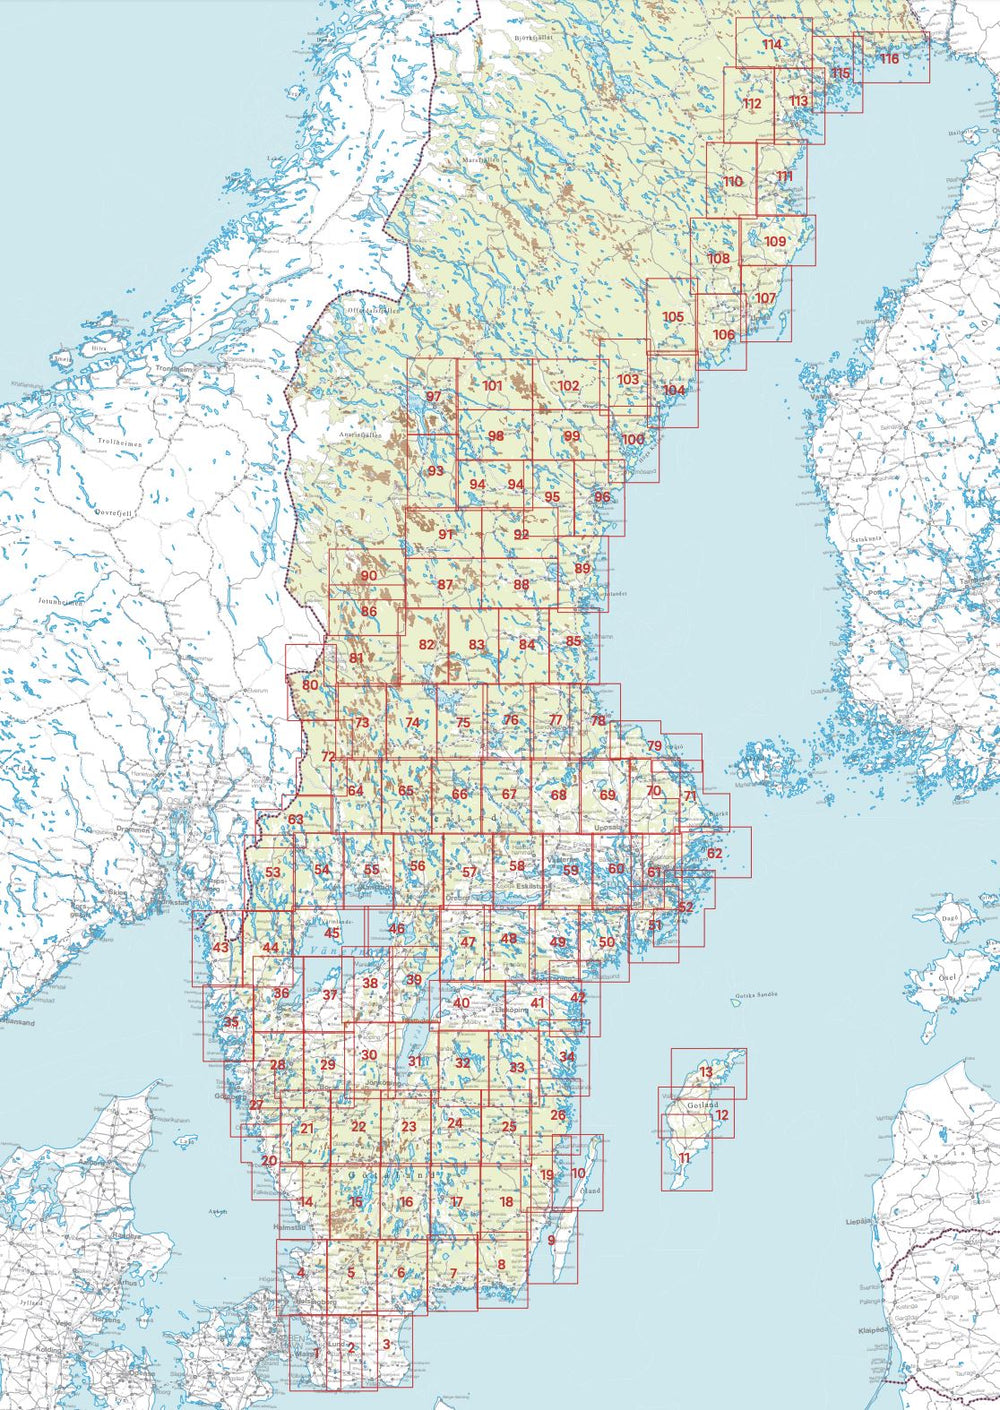 Carte topographique n° 28 - Lerum (Suède) | Norstedts - Sverigeserien carte pliée Norstedts 